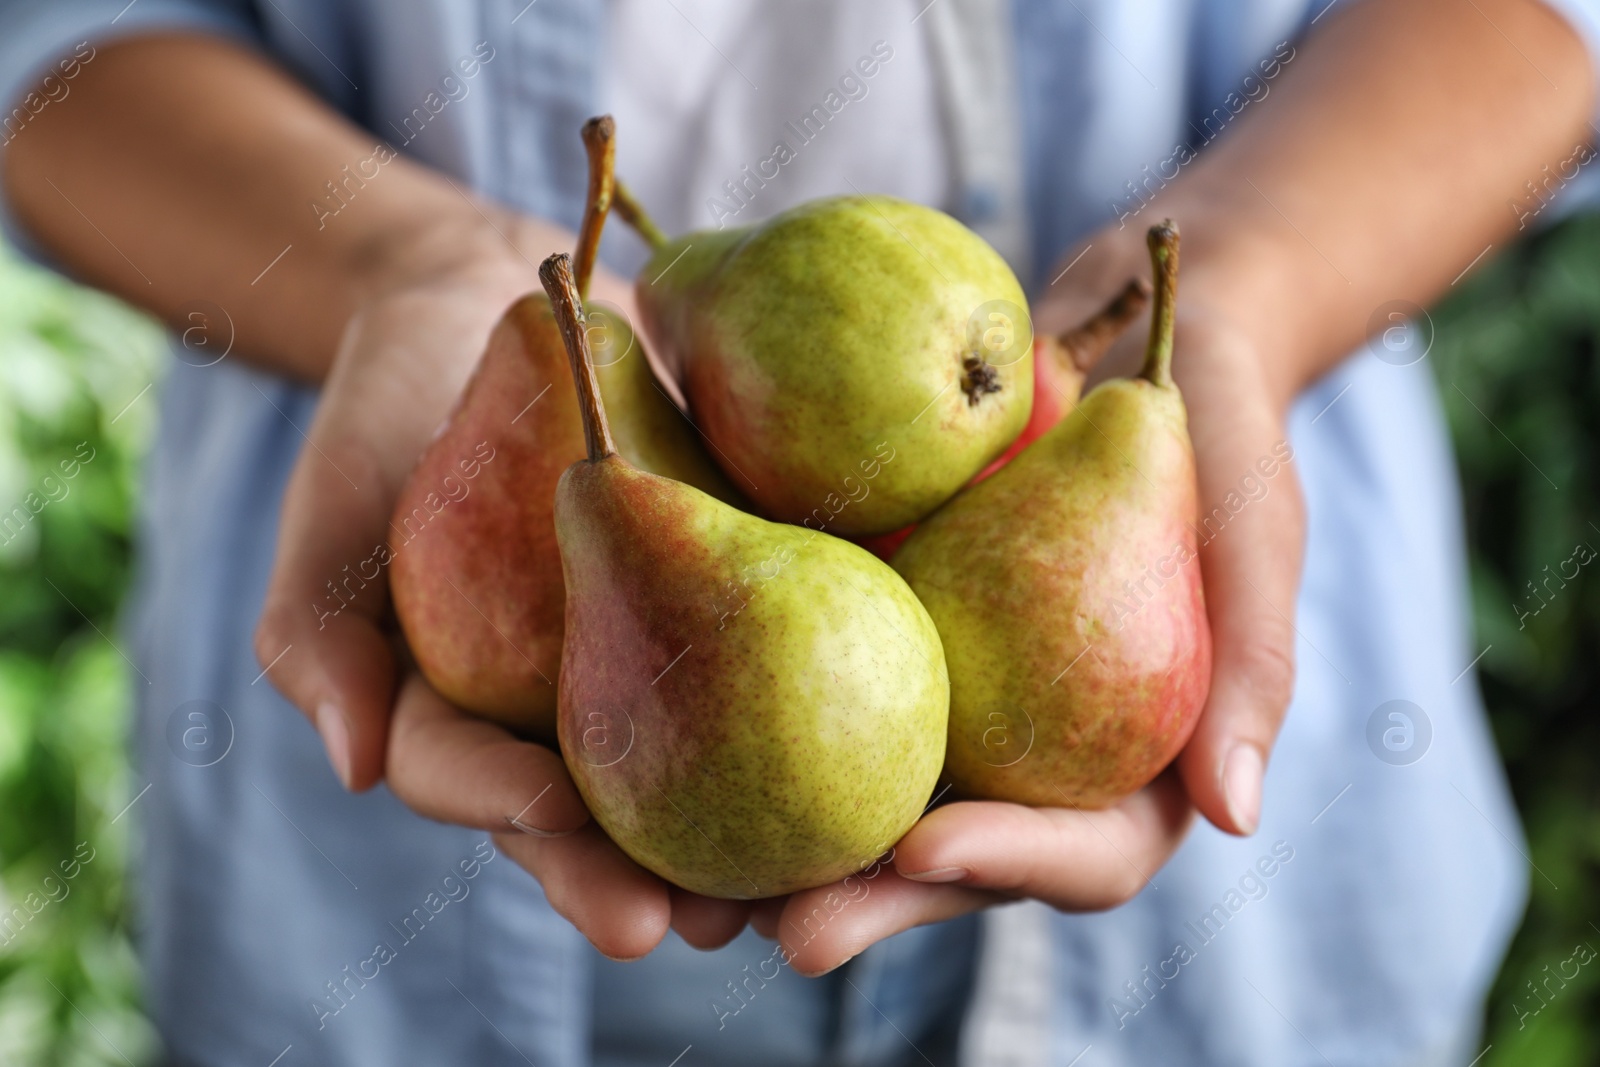 Photo of Farmer holding fresh ripe pears outdoors, closeup